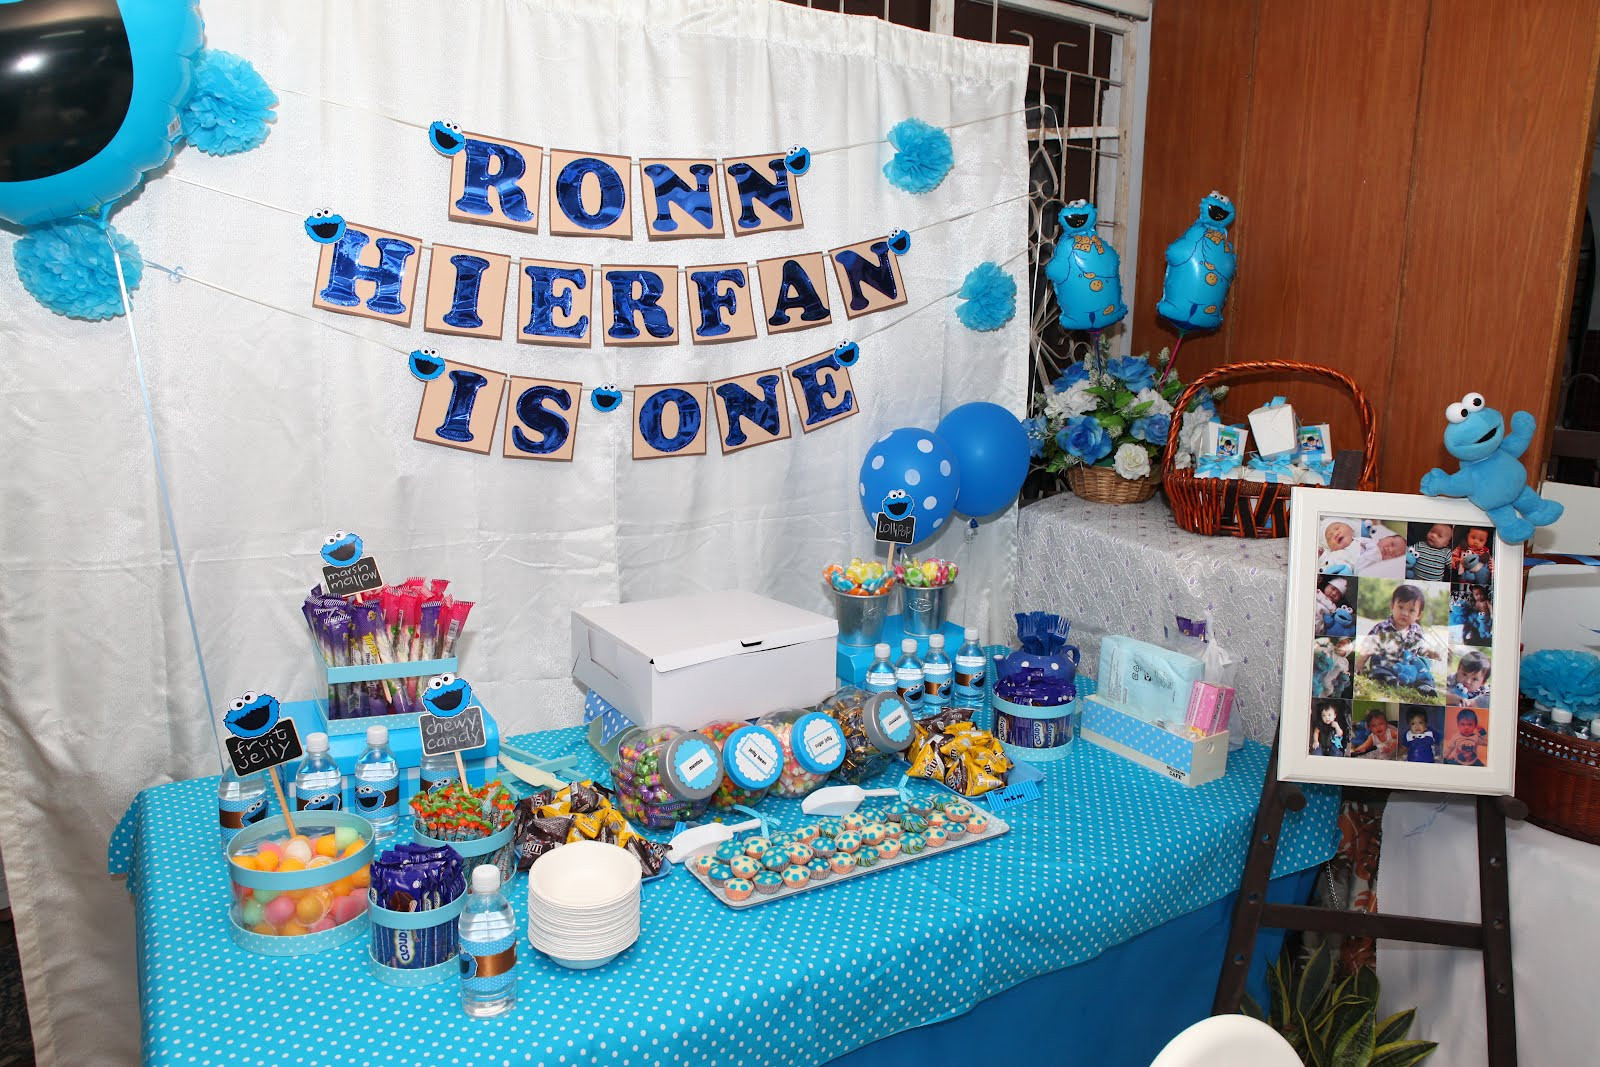 Cookie Monster Birthday Decorations
 Do sDesign Ronn s 1st COOKIE MONSTER BIRTHDAY PARTY